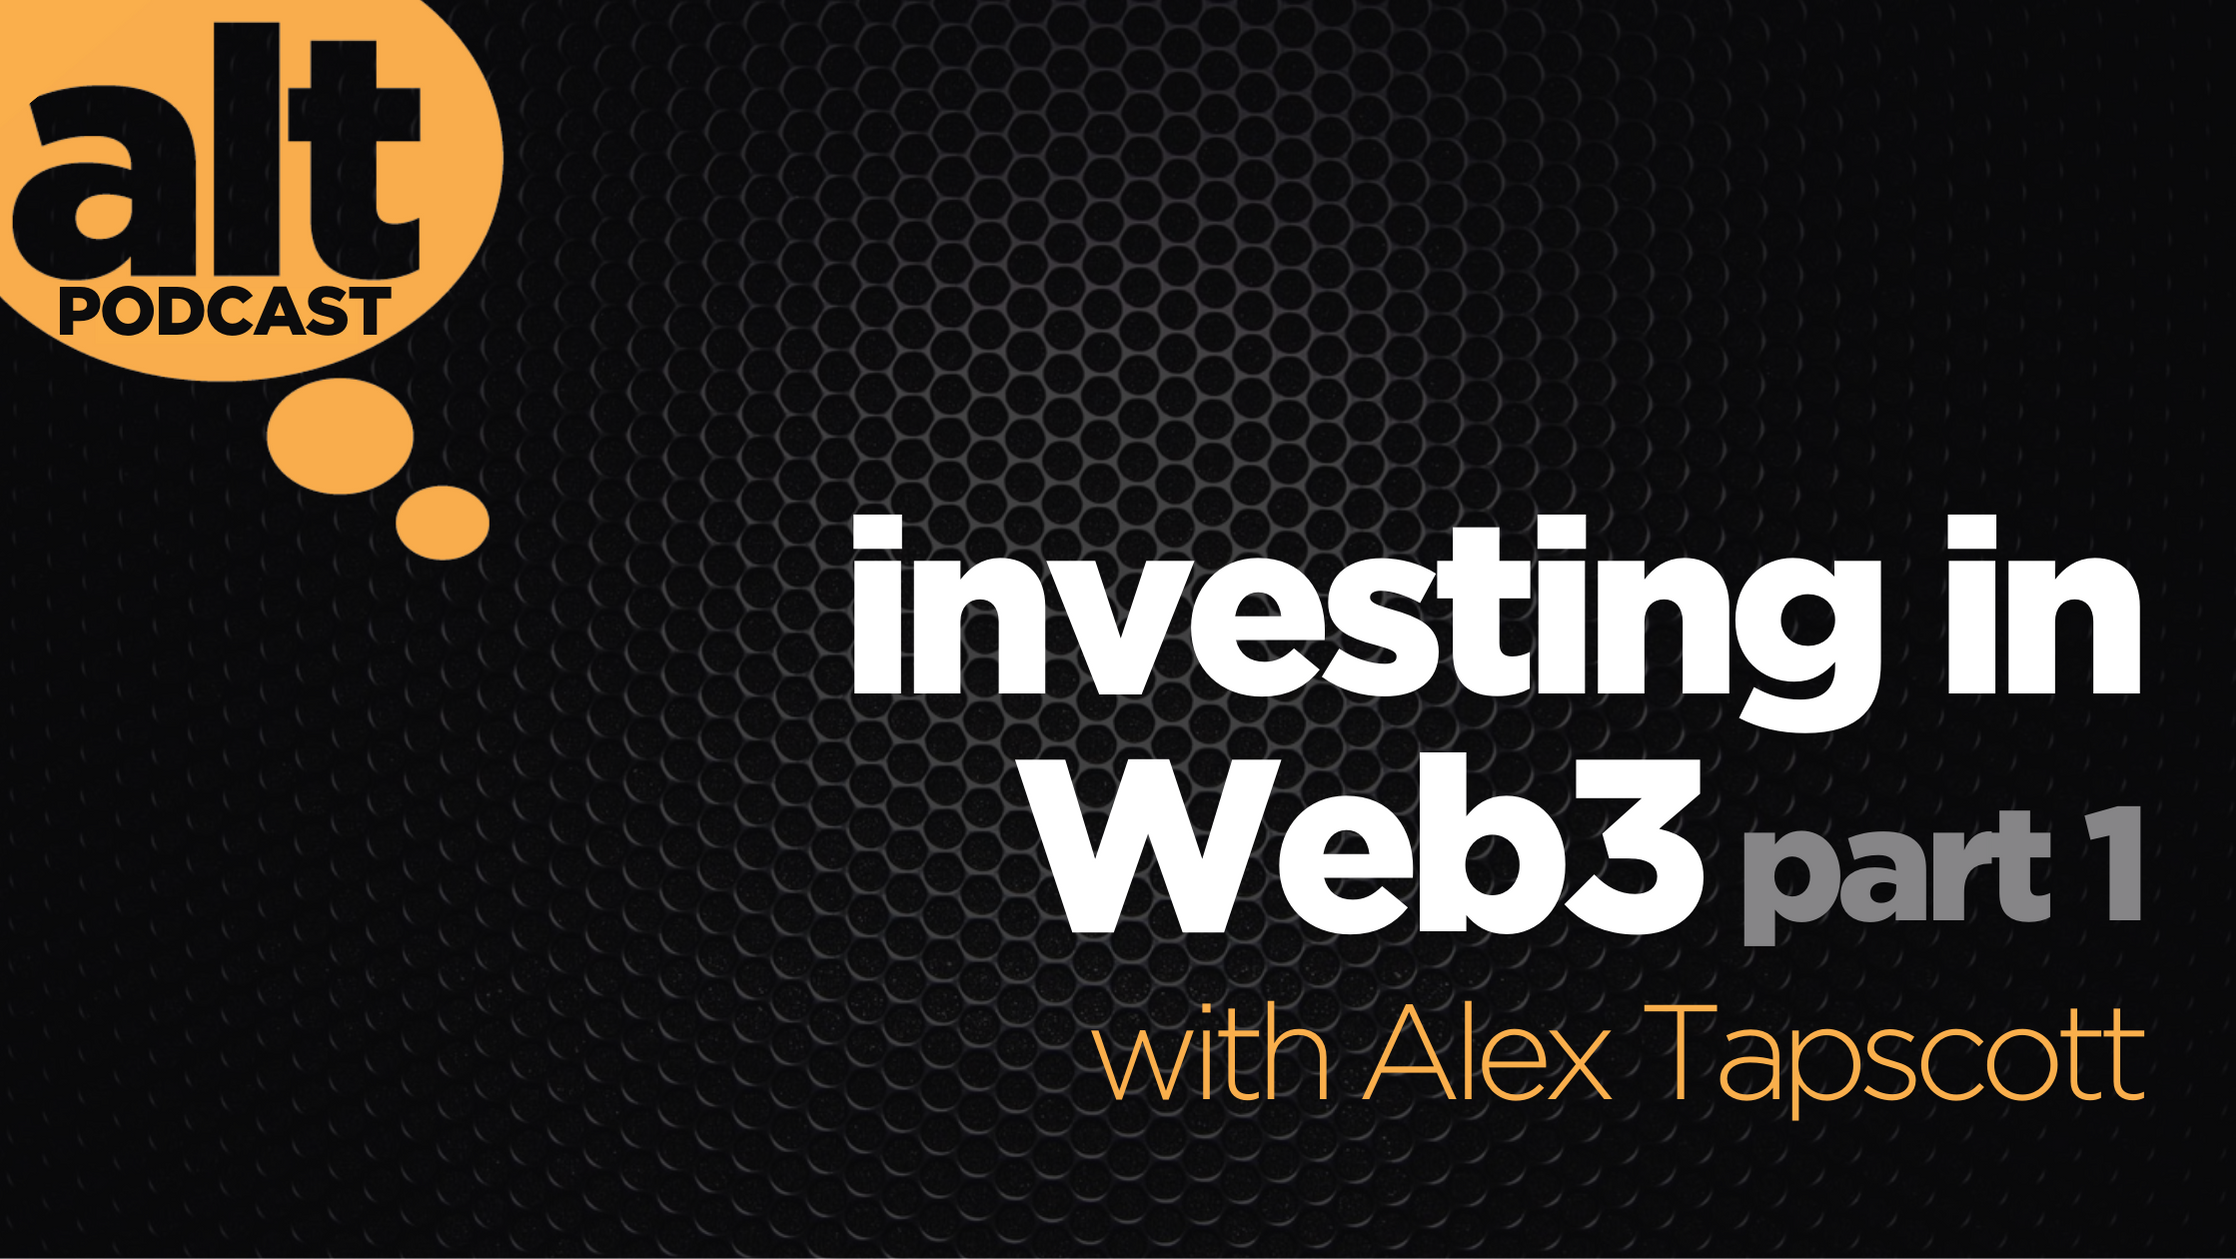 Alt Thinking Podcast: Investing in Web3 with Alex Tapscott Part 1